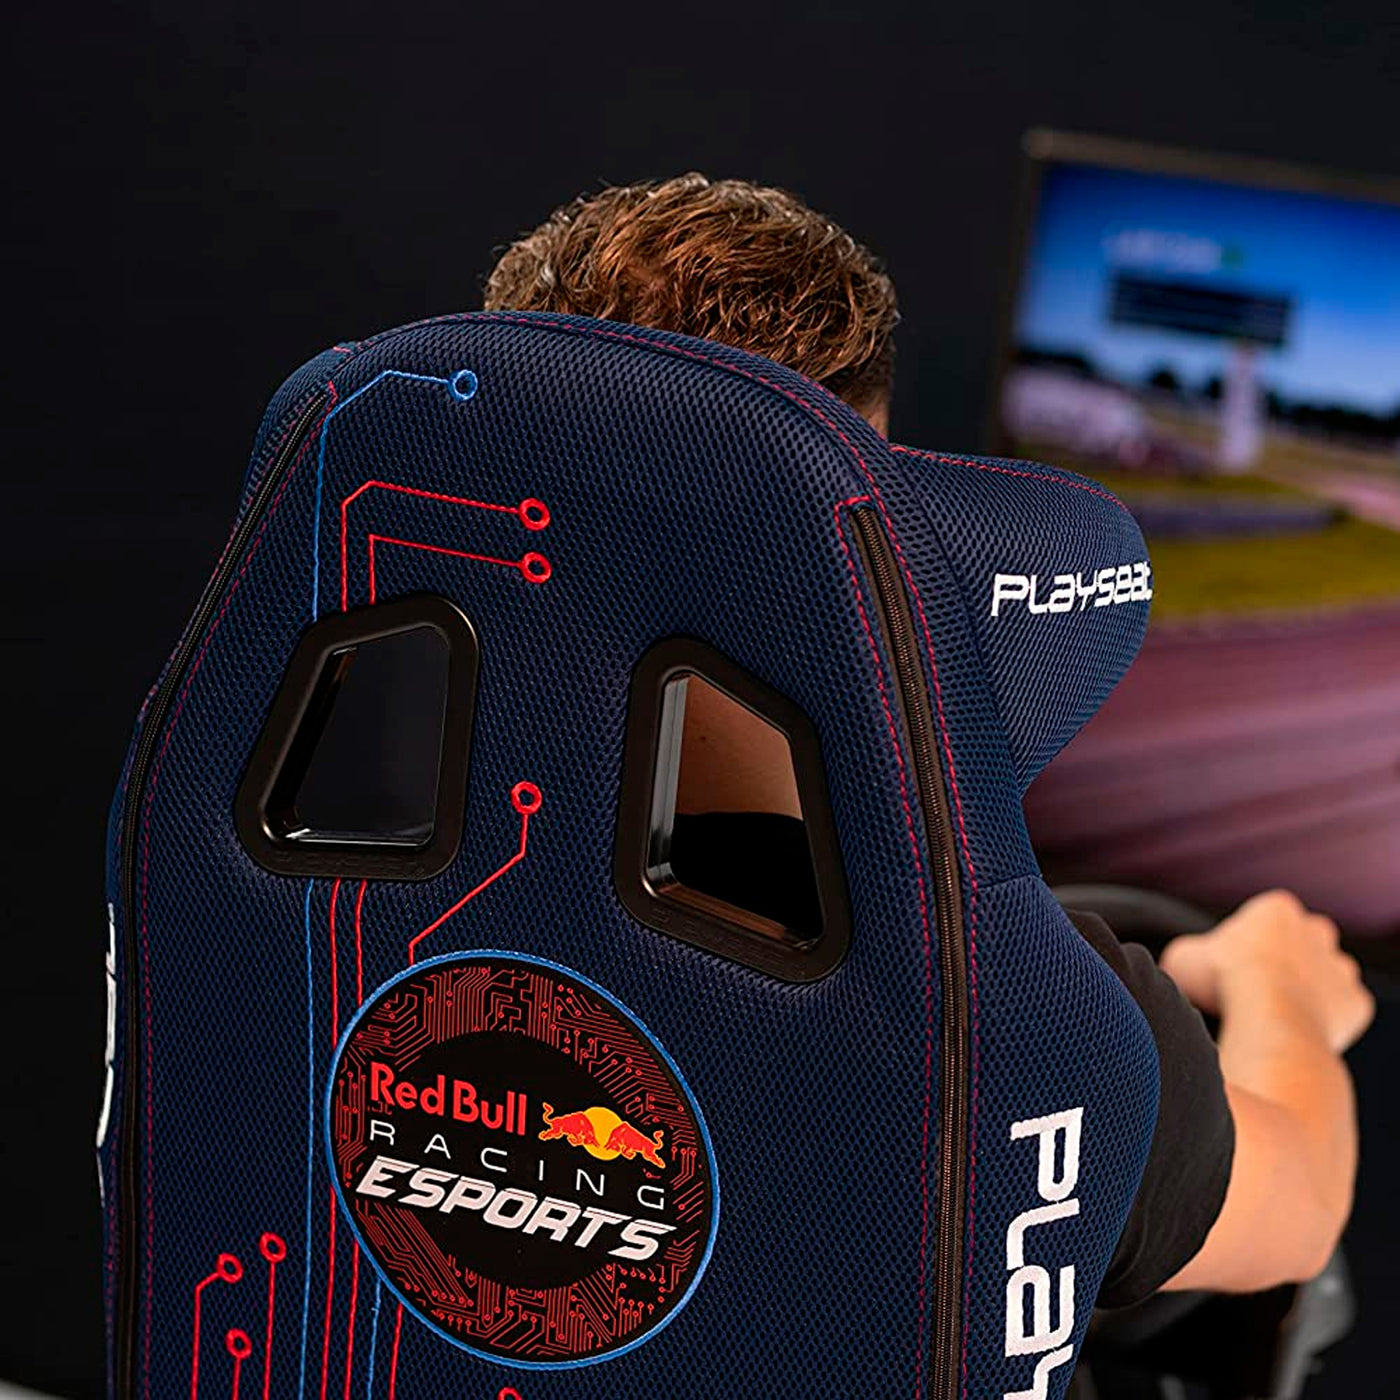 Playseat Evolution PRO Red Bull Racing Esports Silla Simulador